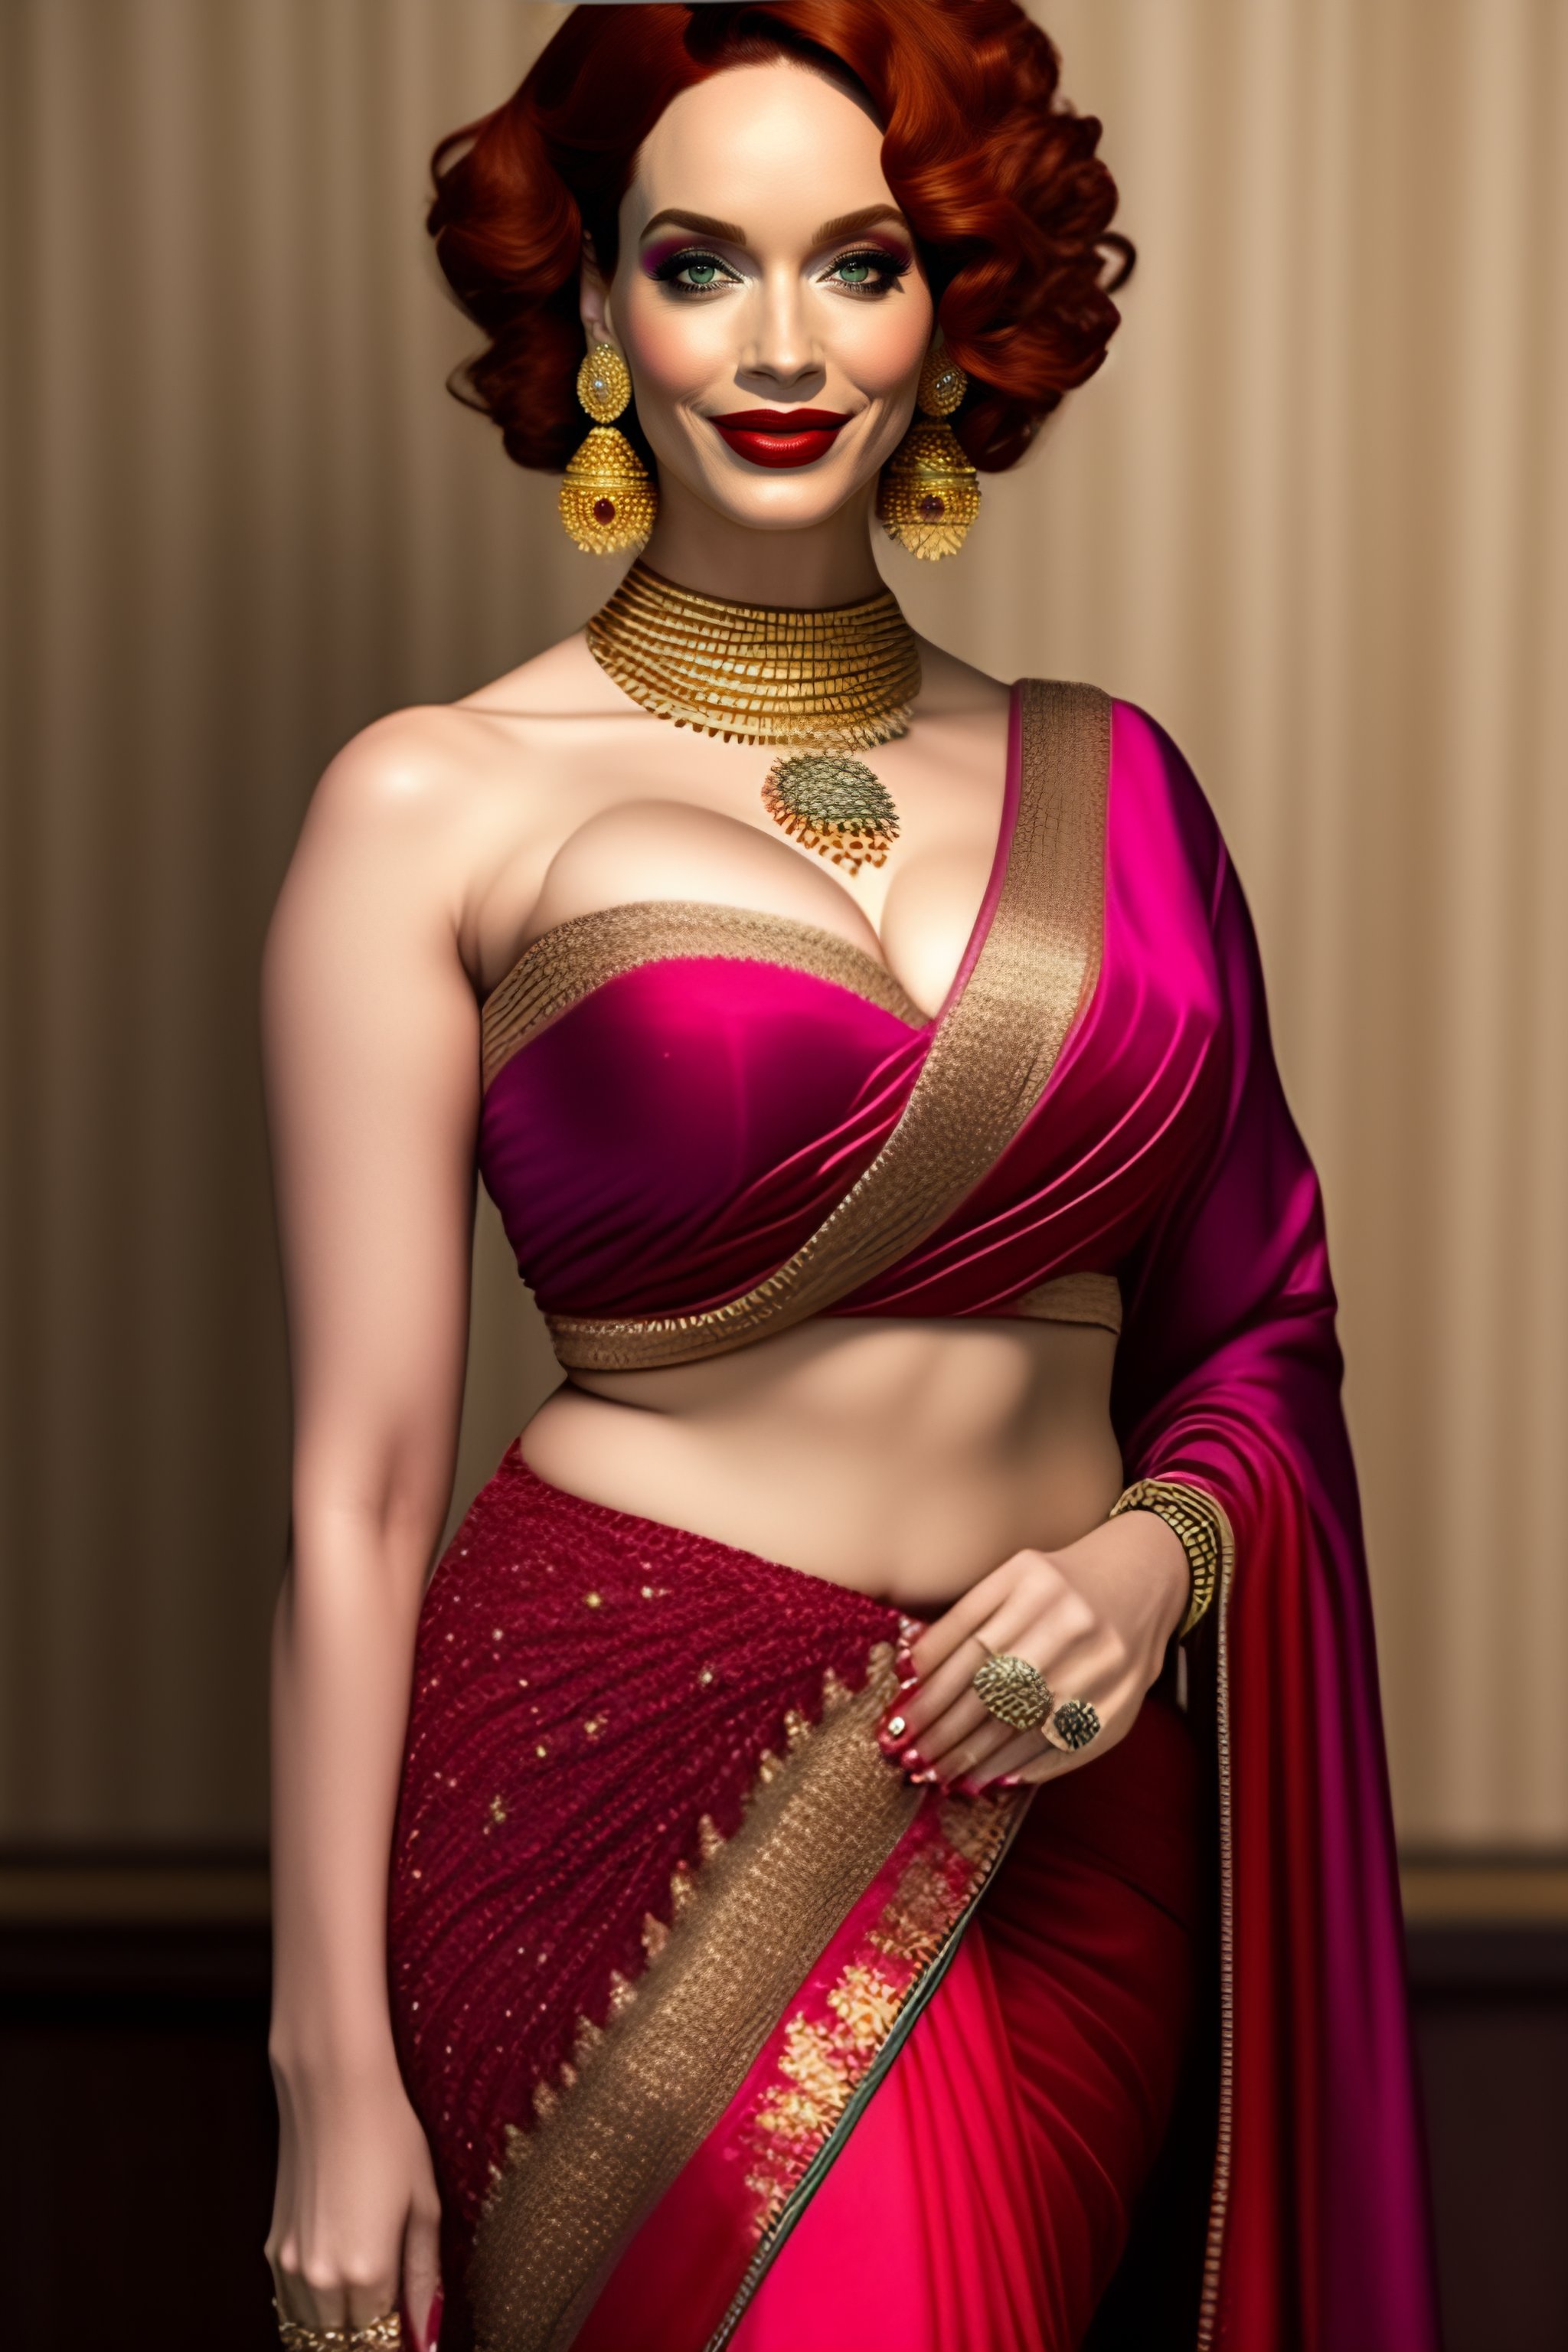 Lexica - Christina Hendricks in saree, Abdominal button, very tall, hour  glass waist , red lipstick,jewellery,posing, magazine cover, full body